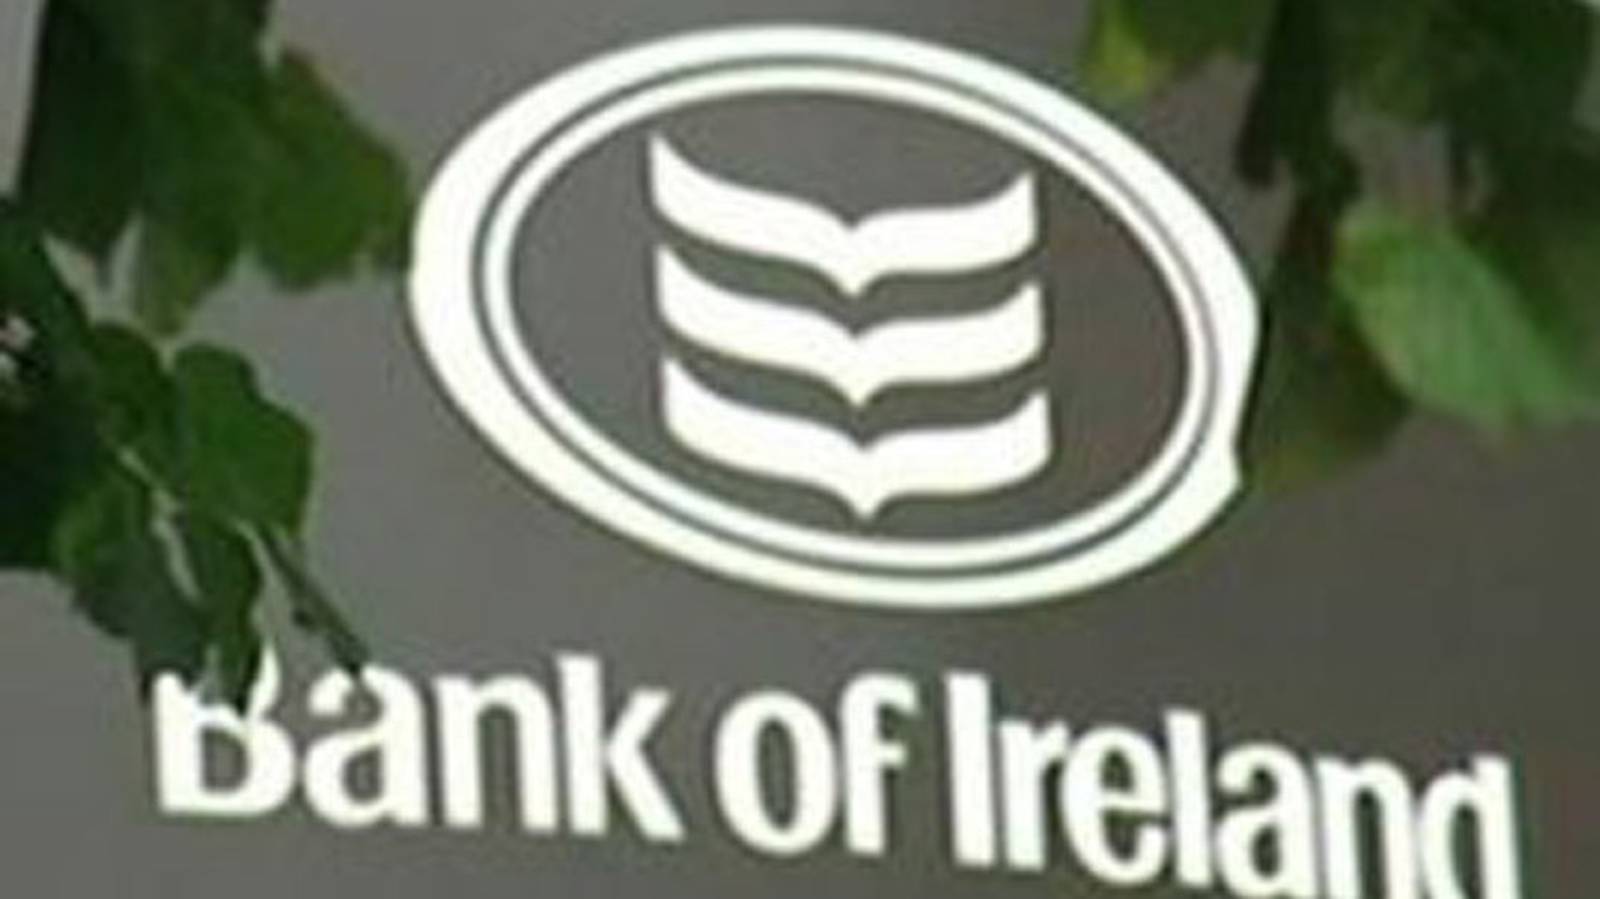 Corruption foundation. Bank of Ireland. Bank of Ireland logo. Bank of Ireland уведомления. Allied Irish Banks, p.l.c.